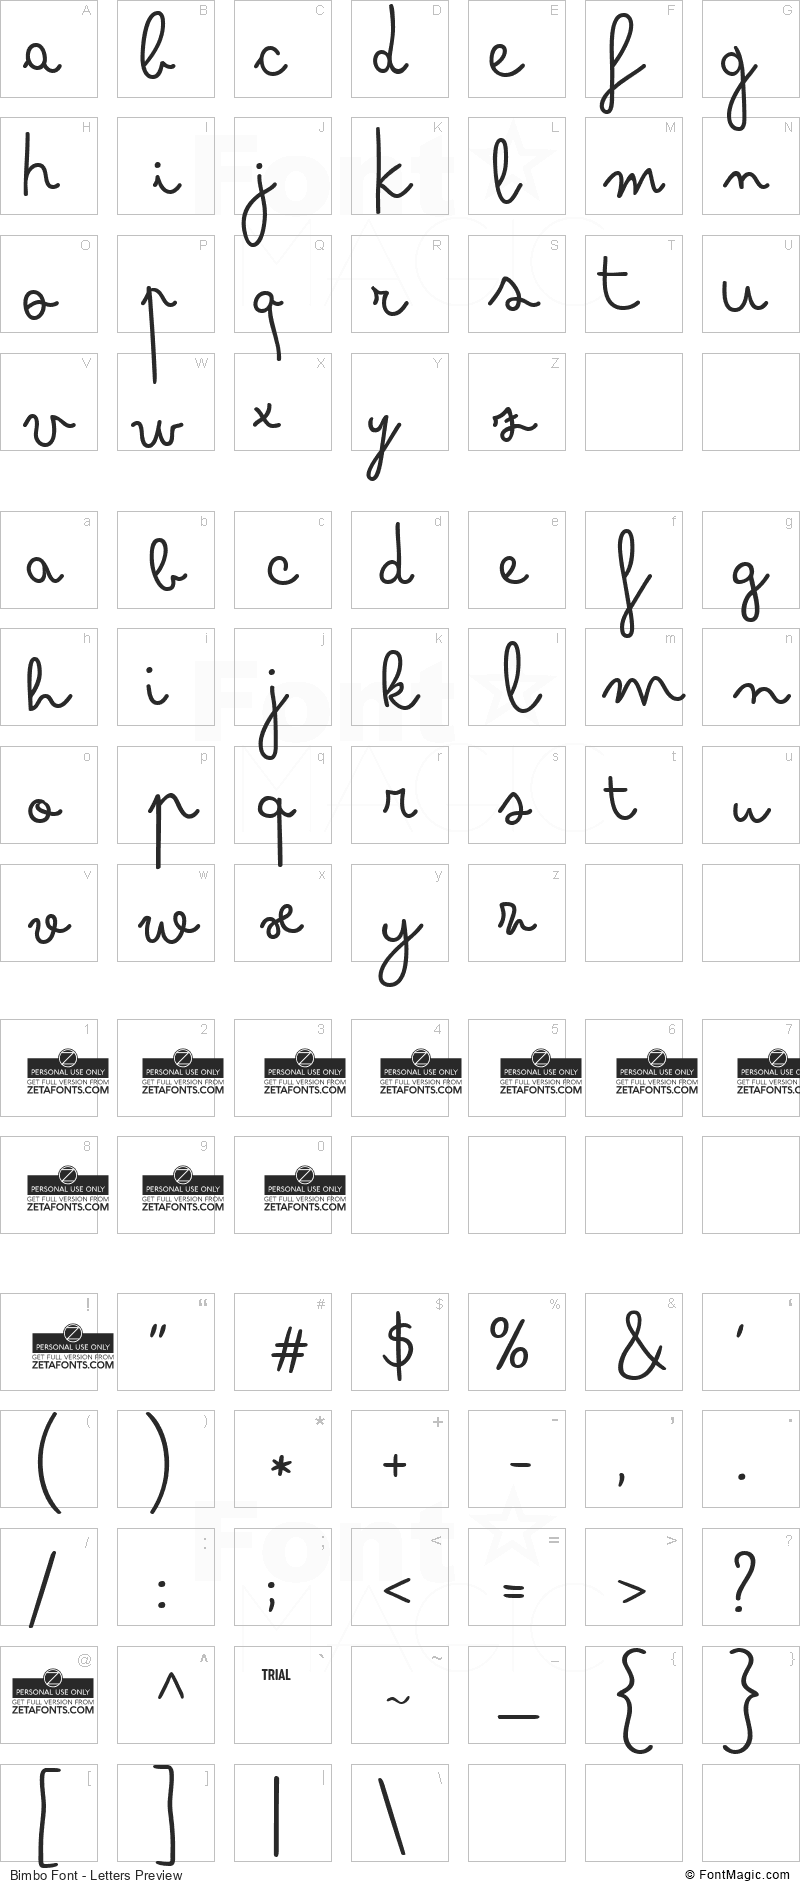 Bimbo Font - All Latters Preview Chart